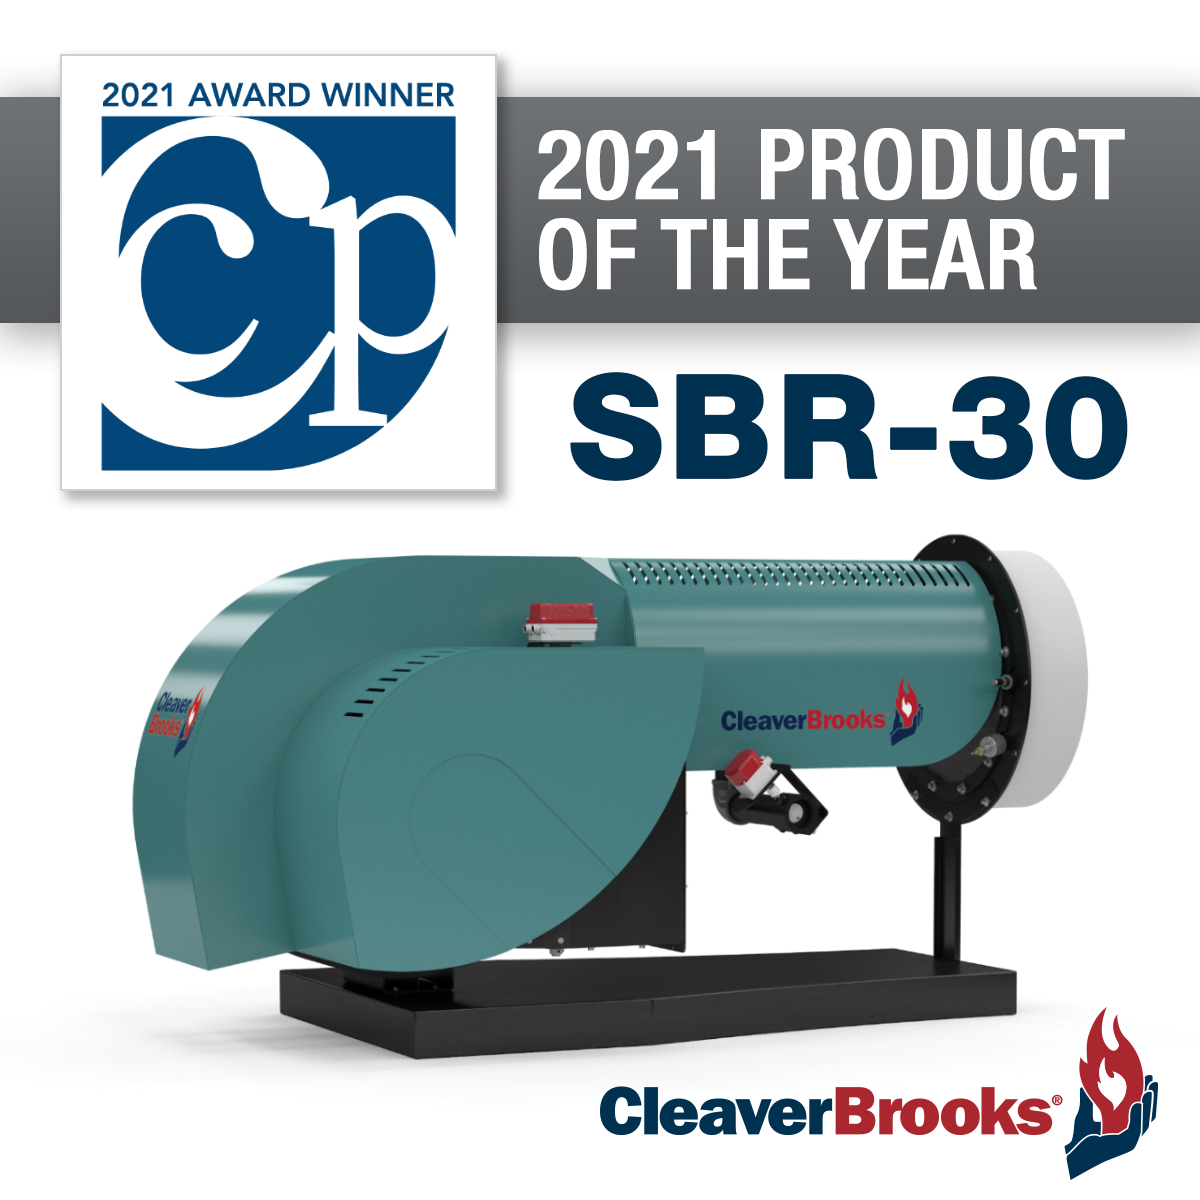 Cleaver-Brooks ProFire SBR-30 Series Burner  Recognized 